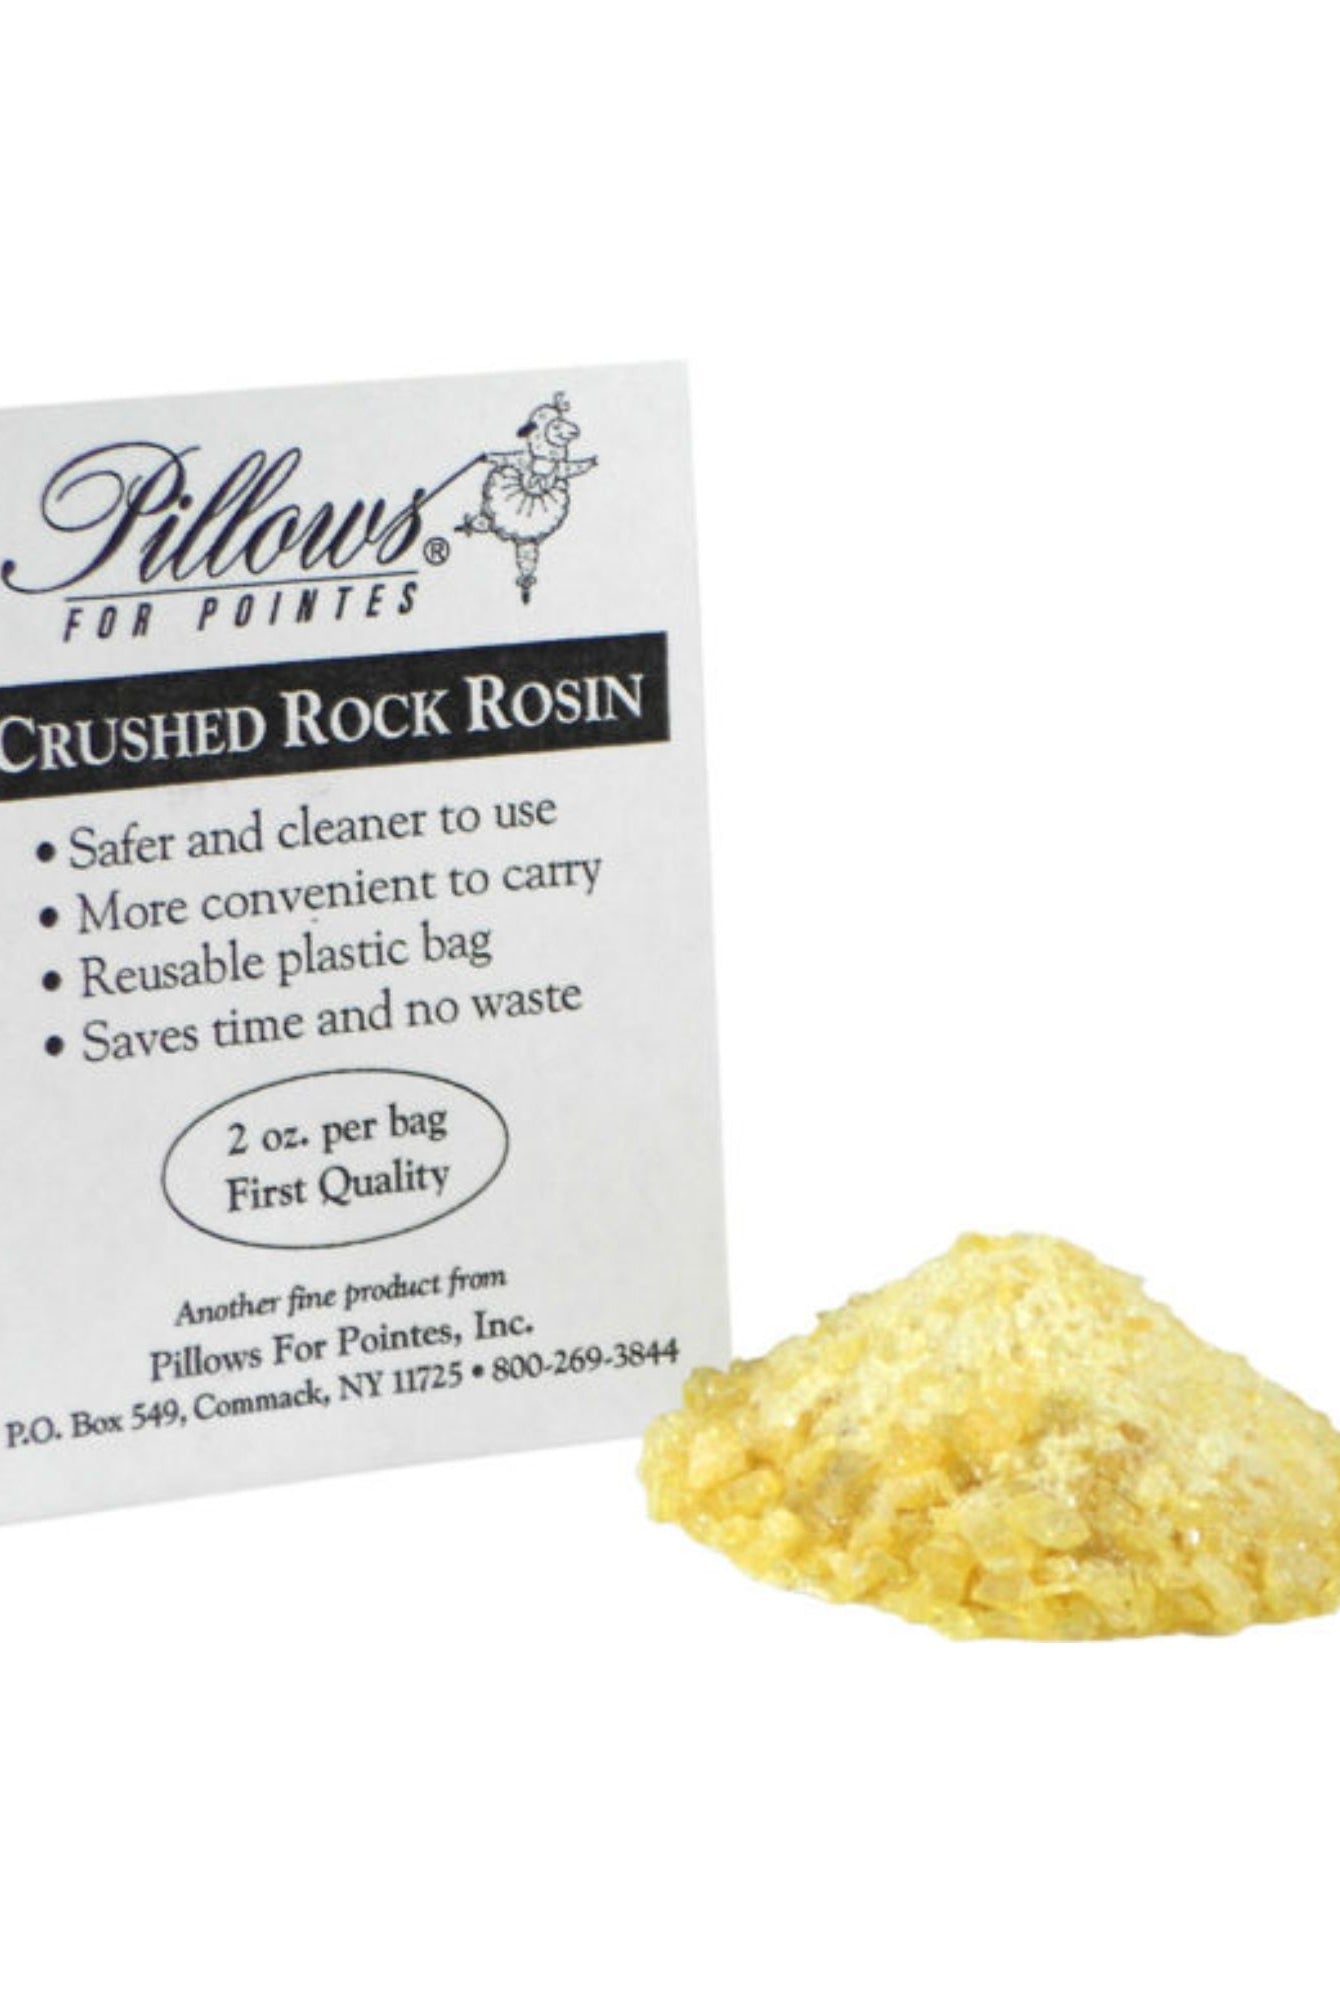 Personal Pocket Size Yellow Rock Rosin